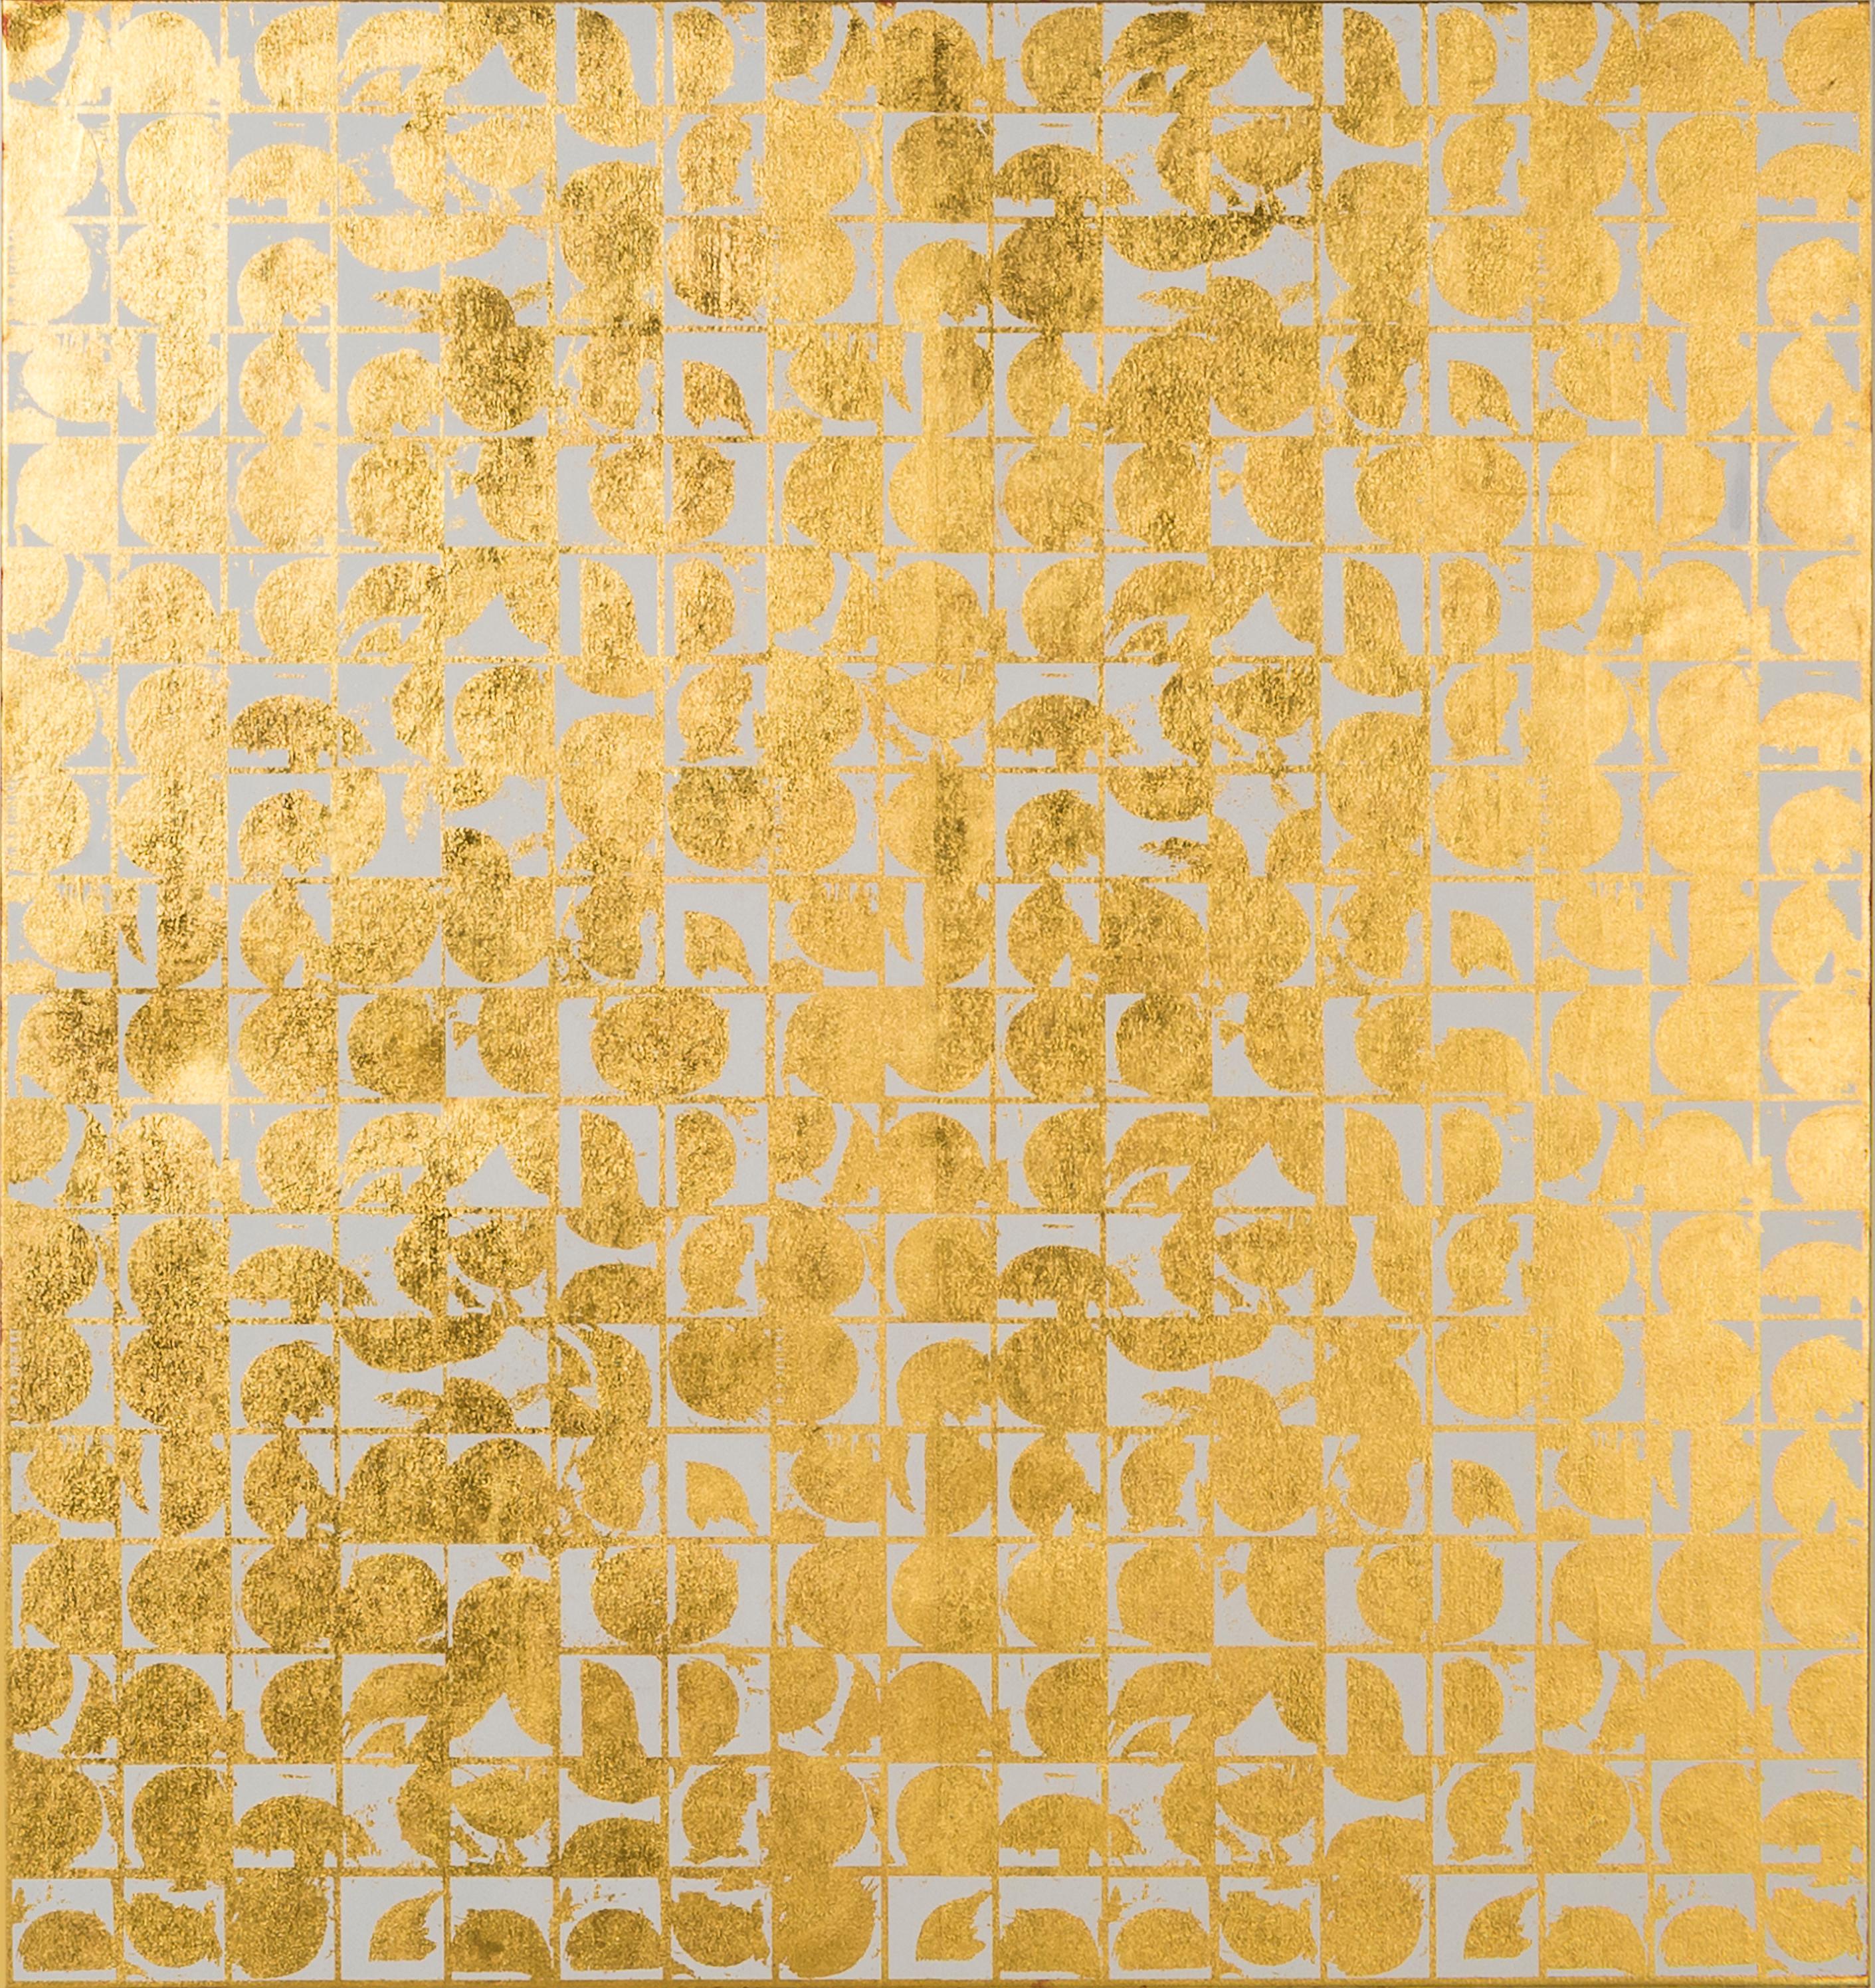 ROUNDS NEGATIVE CANVAS I (BONE) (design gold white metallic work on canvas)